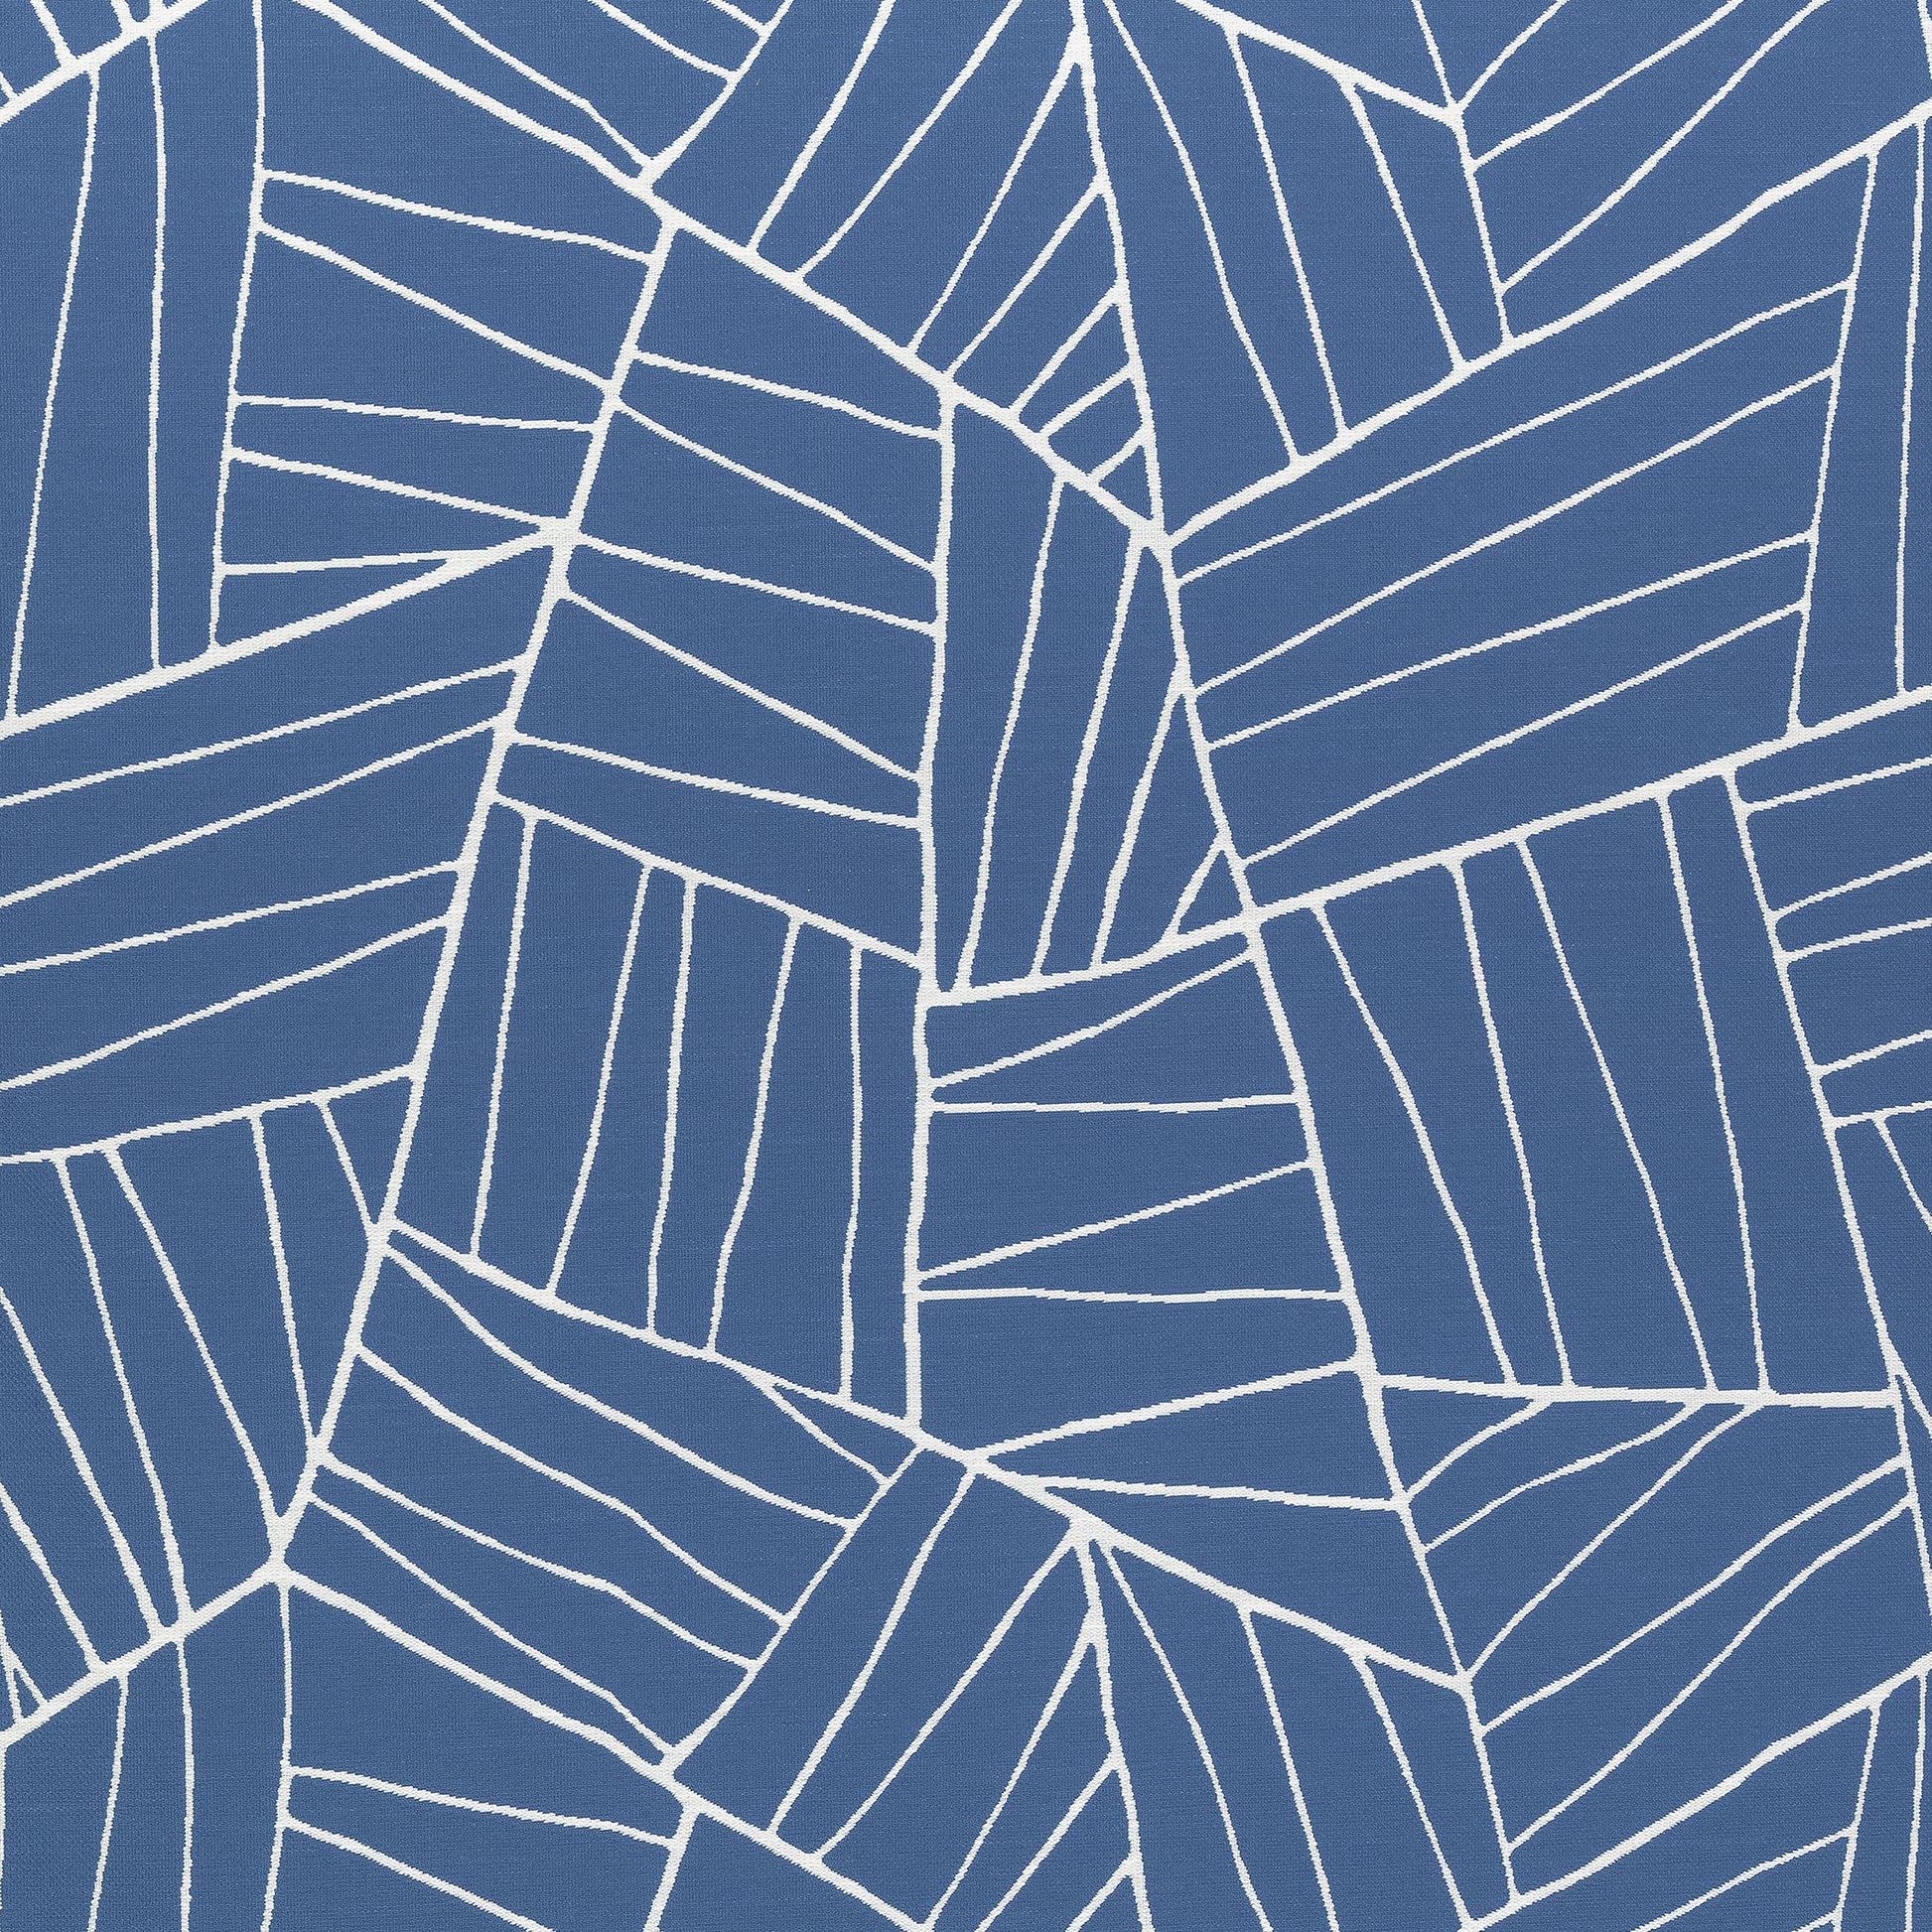 Purchase Thibaut Fabric Pattern number W74654 pattern name Jordan color Royal Blue